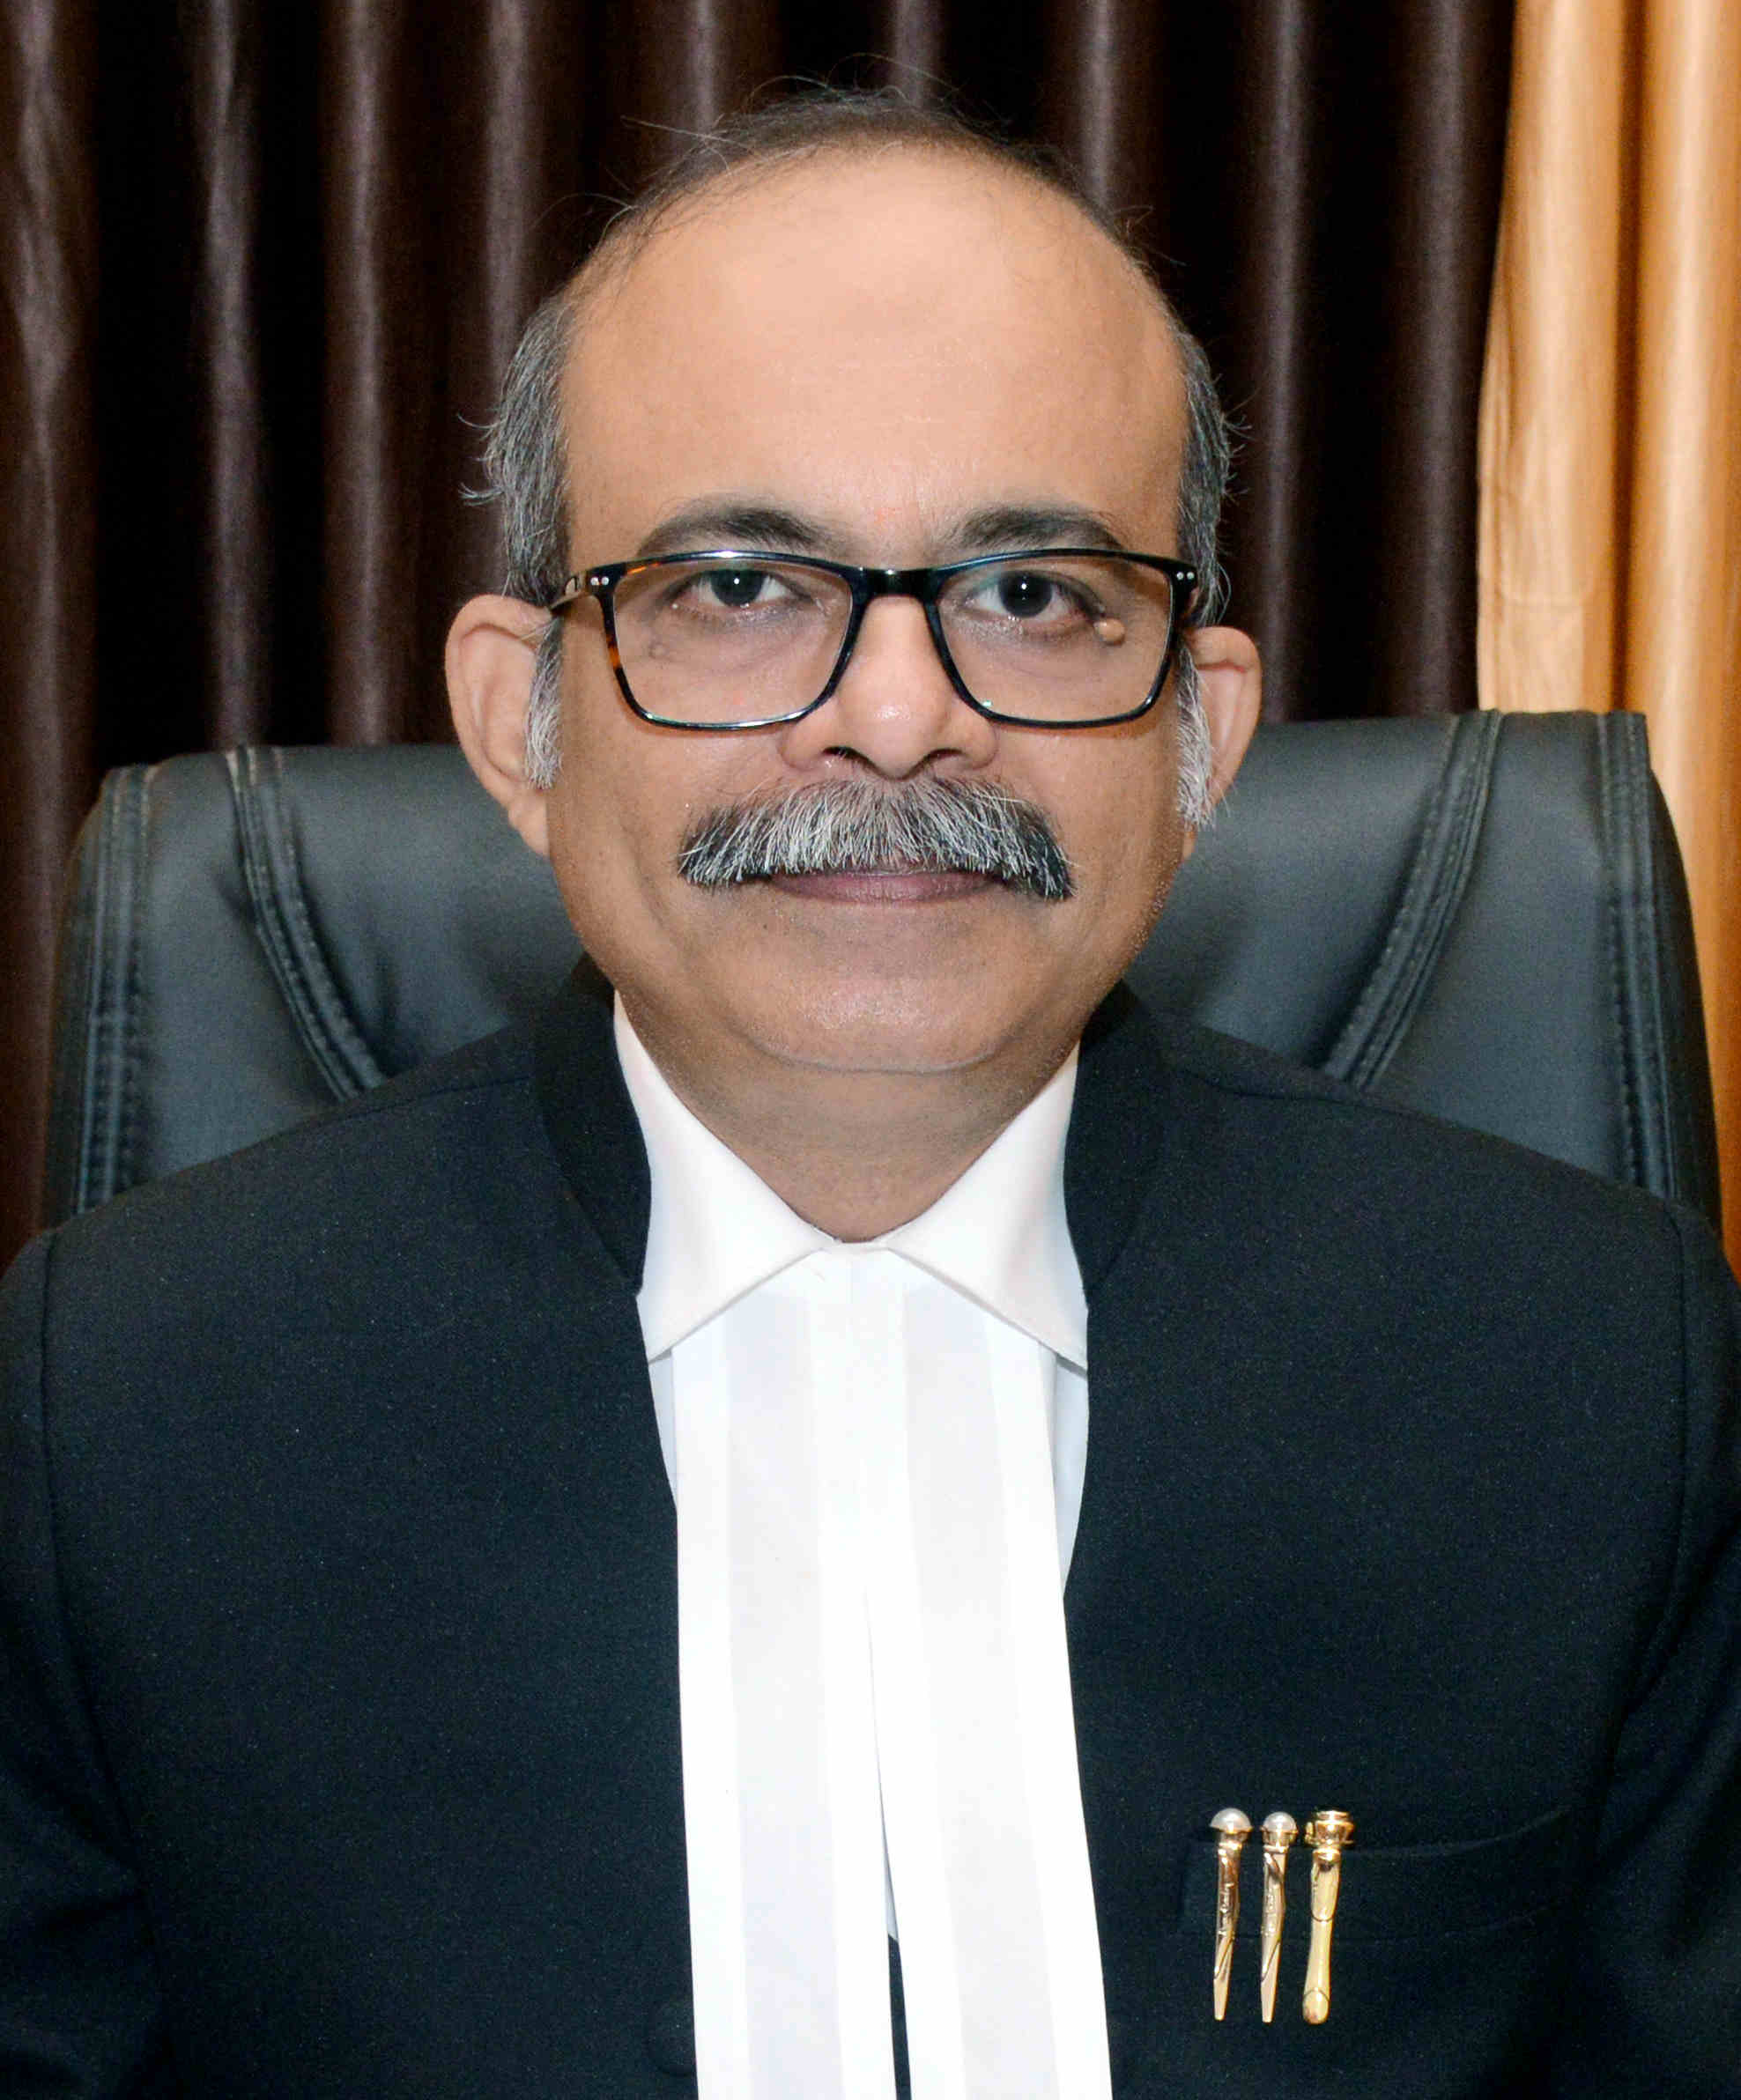 Hon'ble Mr. Justice Sachin Singh Rajput